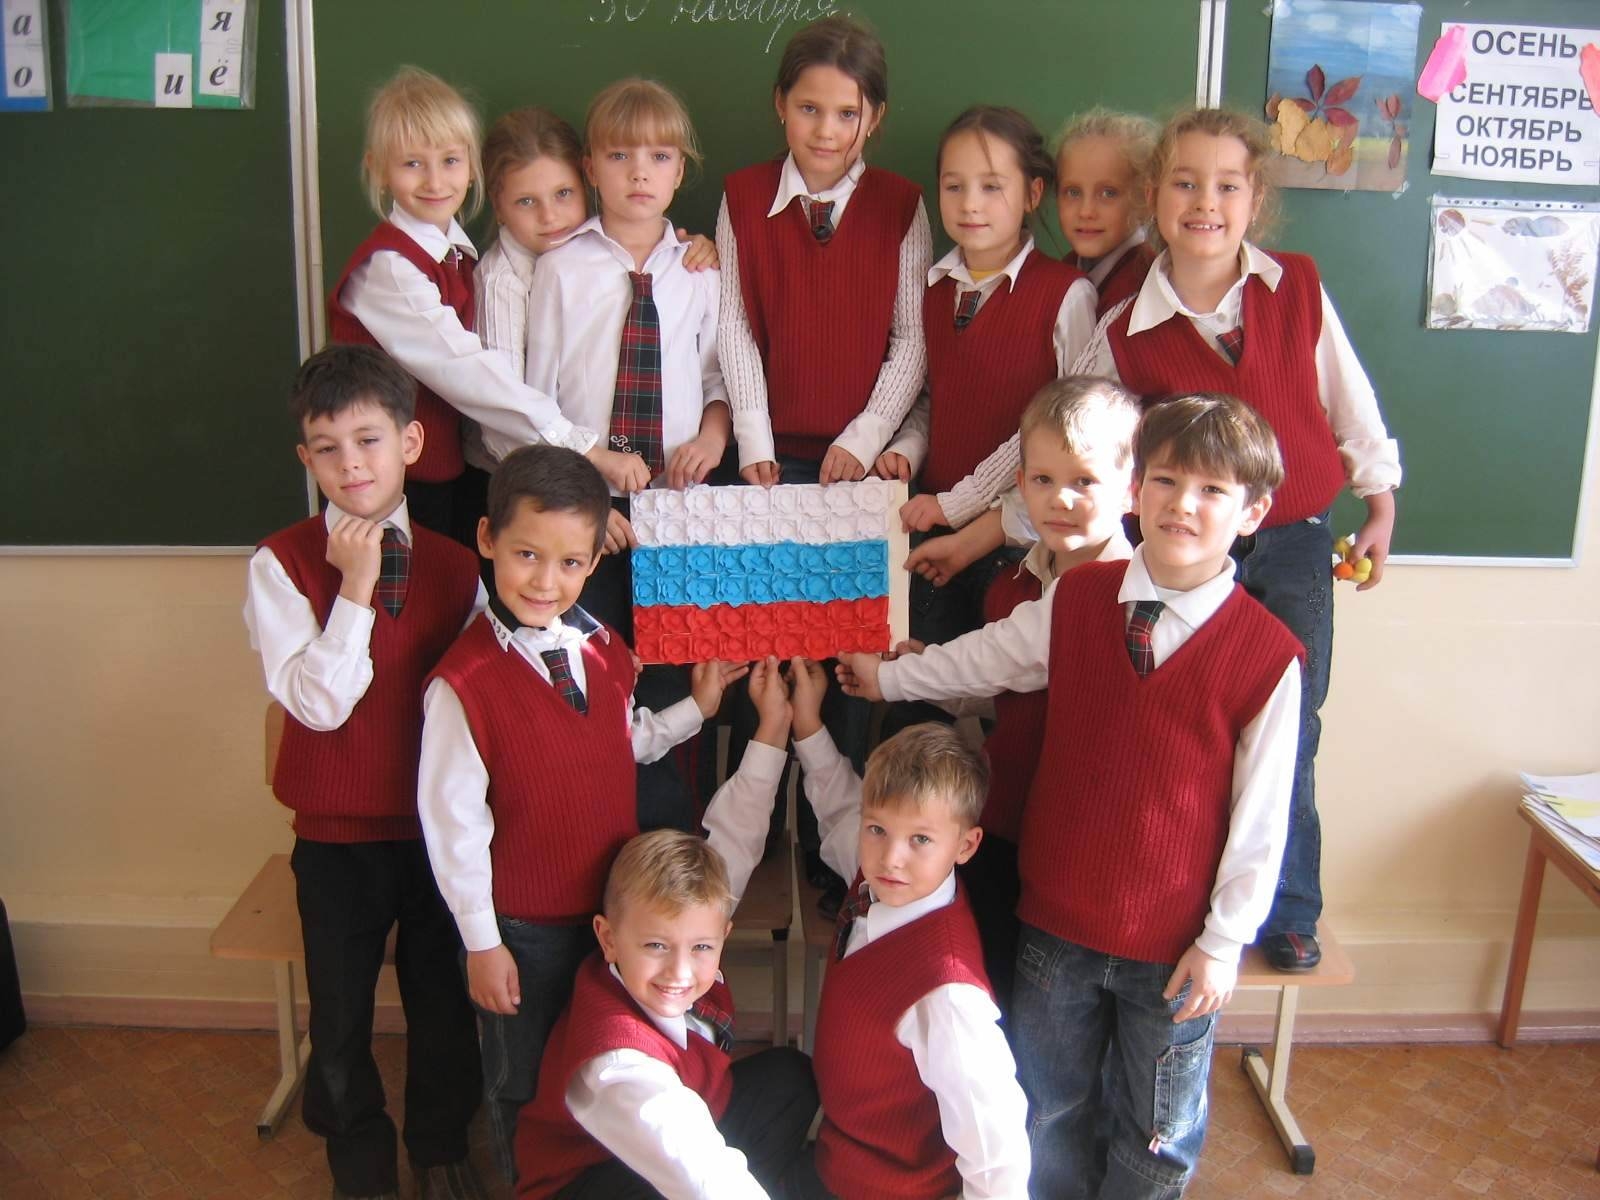 Russian School 16 - XVIDEOSCOM